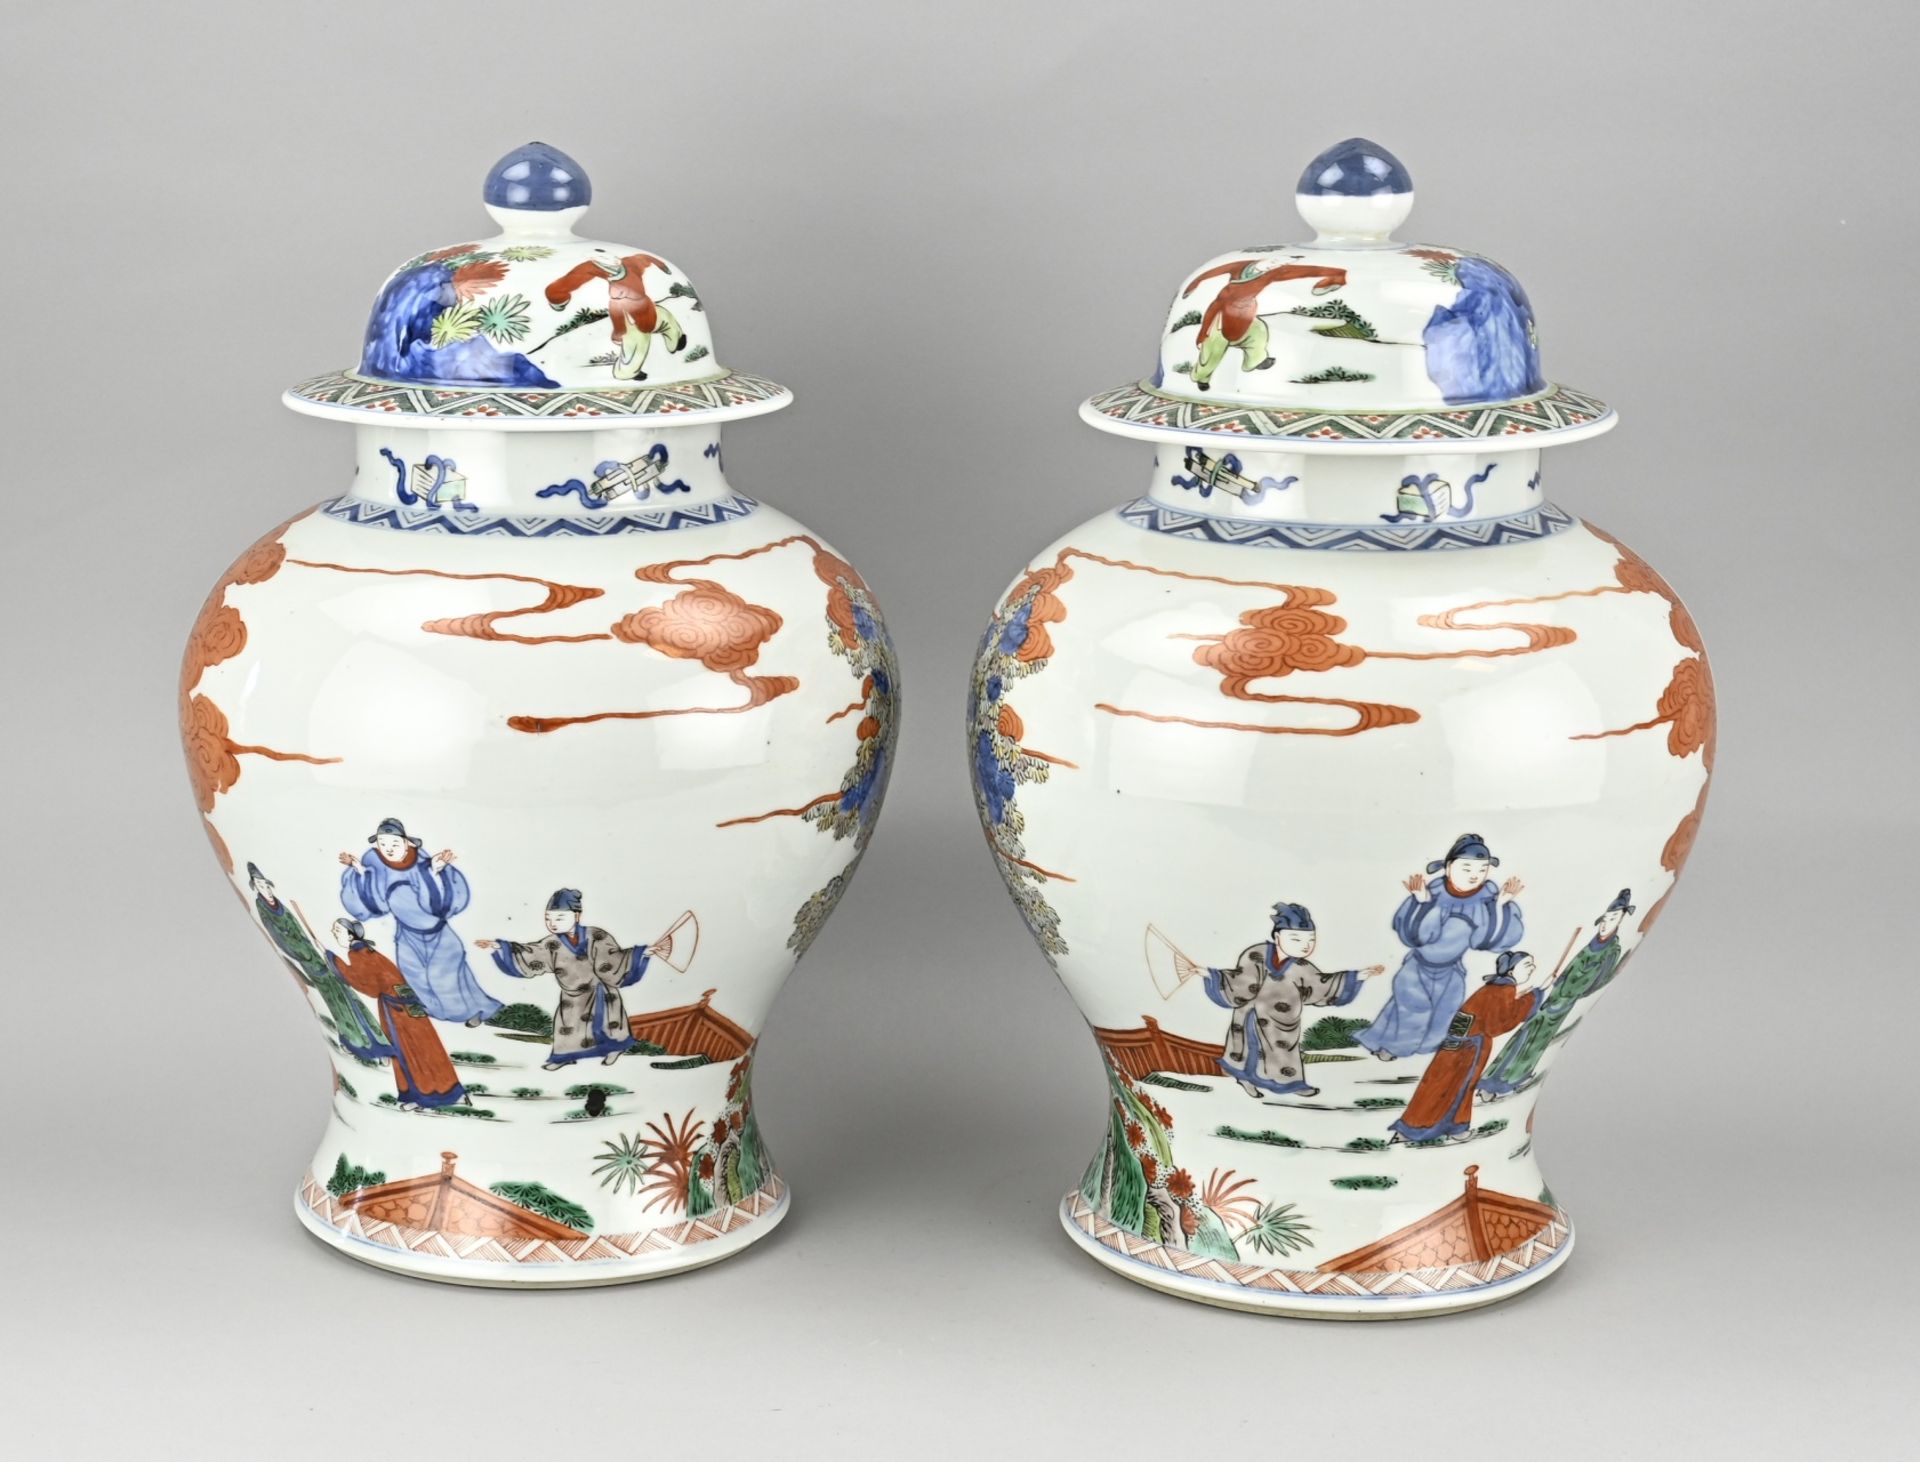 2x Chinese lidded vase, H 40.5 cm. - Image 2 of 3